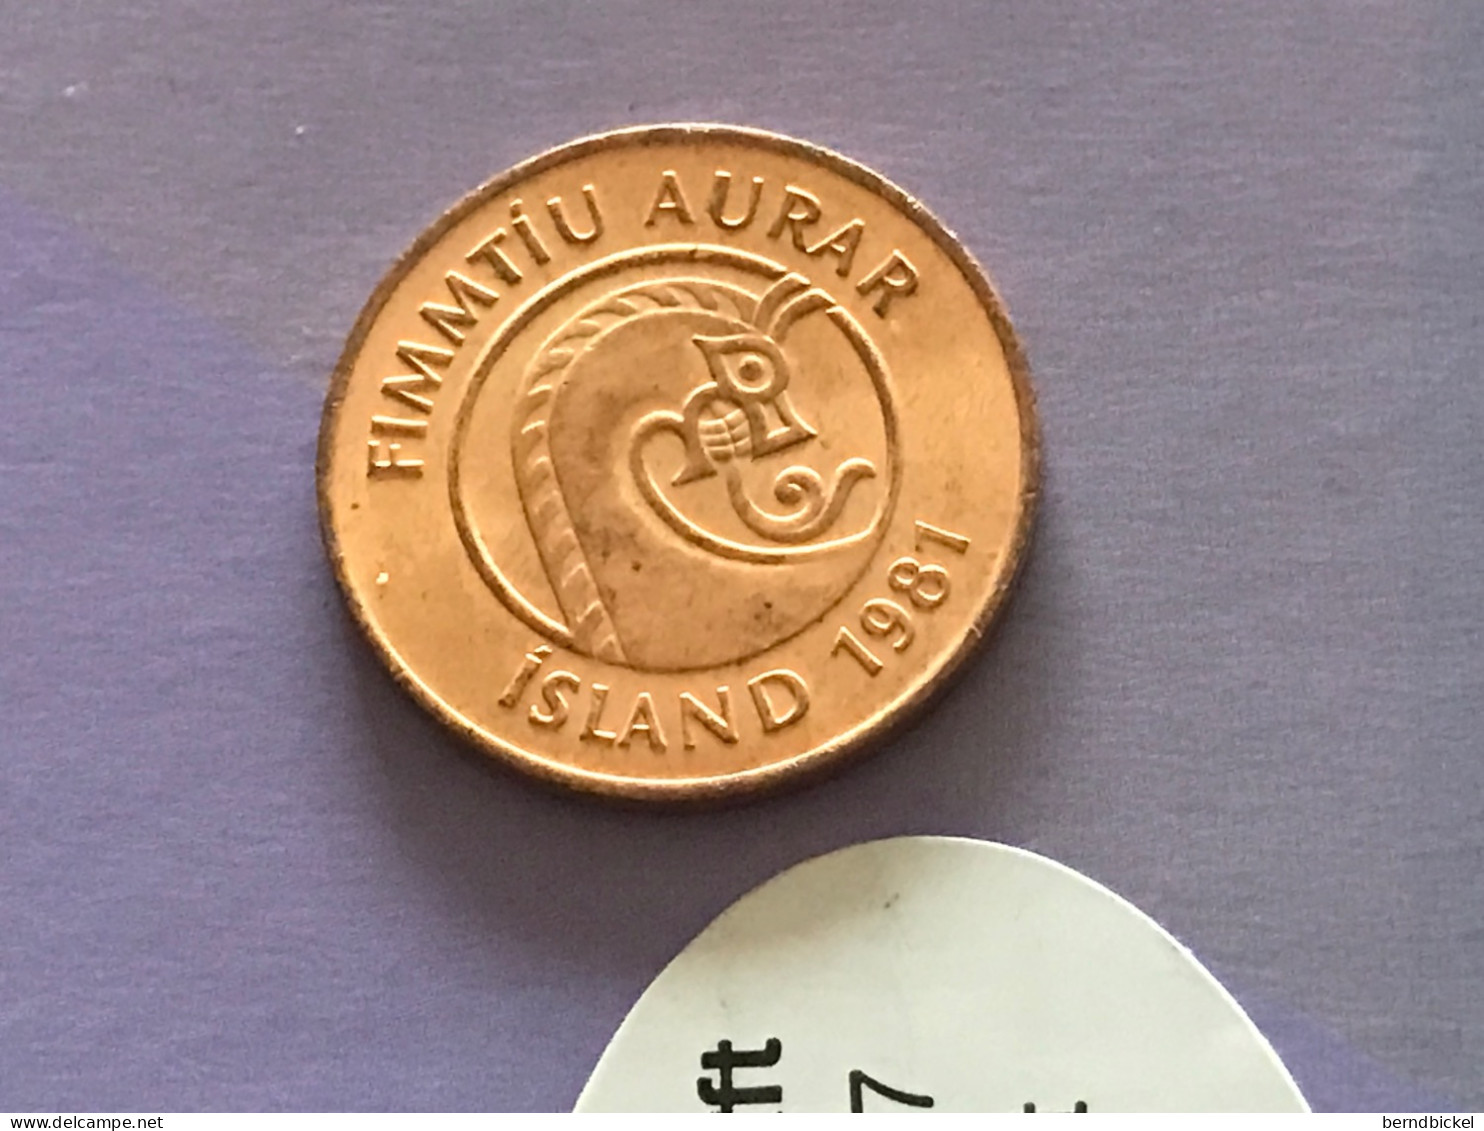 Münze Münzen Umlaufmünze Island 50 Aurar 1981 - IJsland